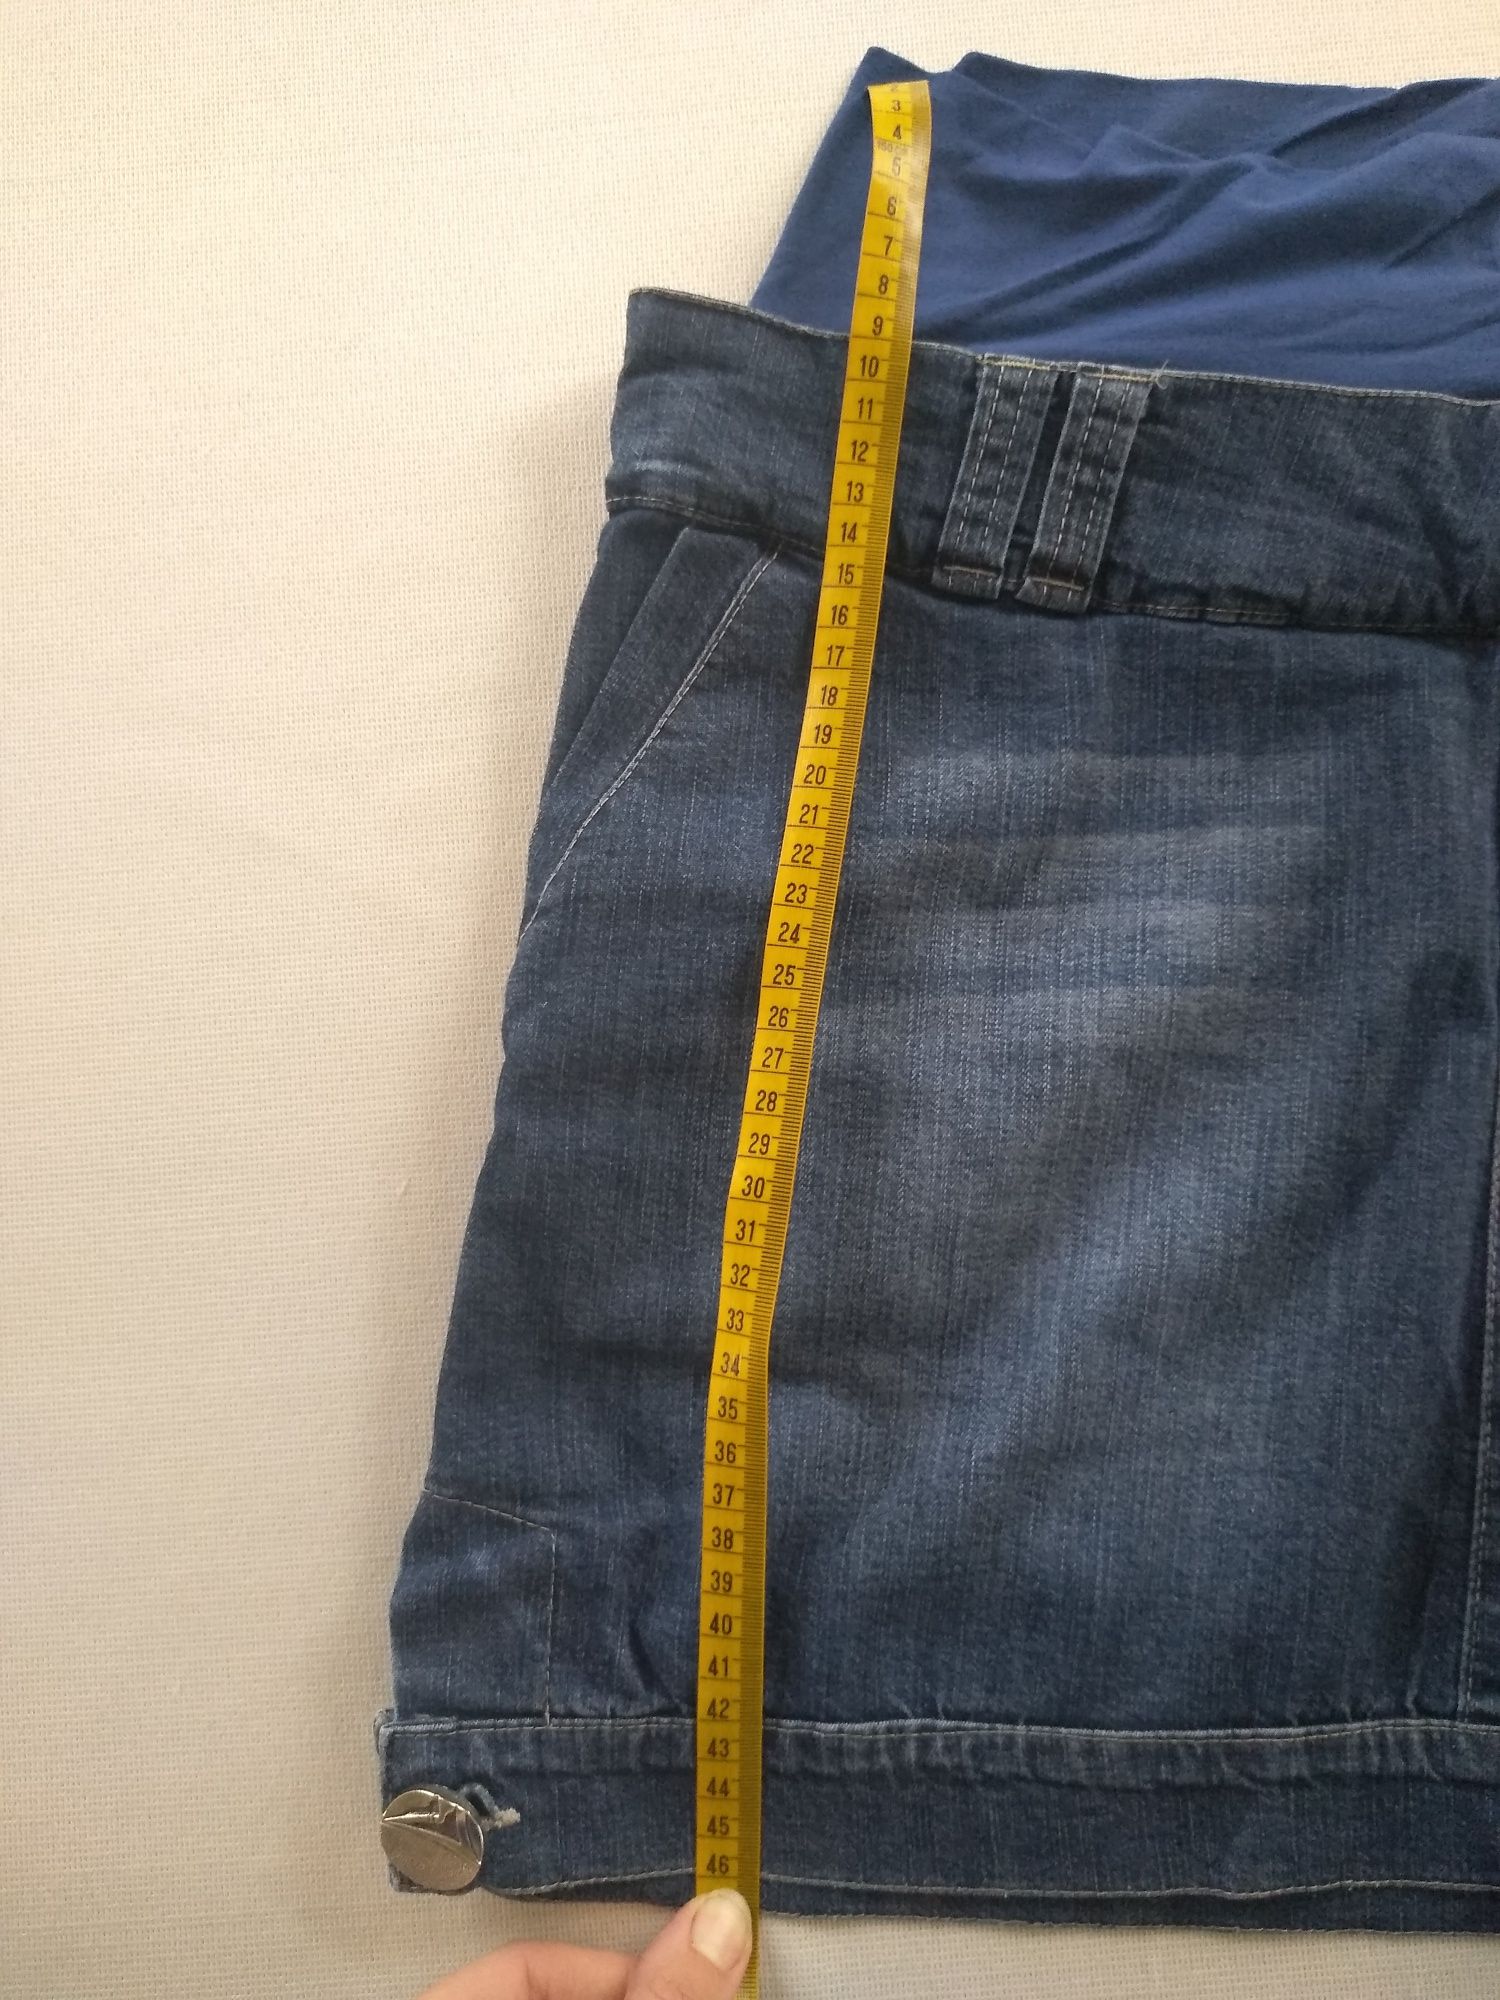 Spódnica jeansowa ciążowa r L/40 z panelem Qba